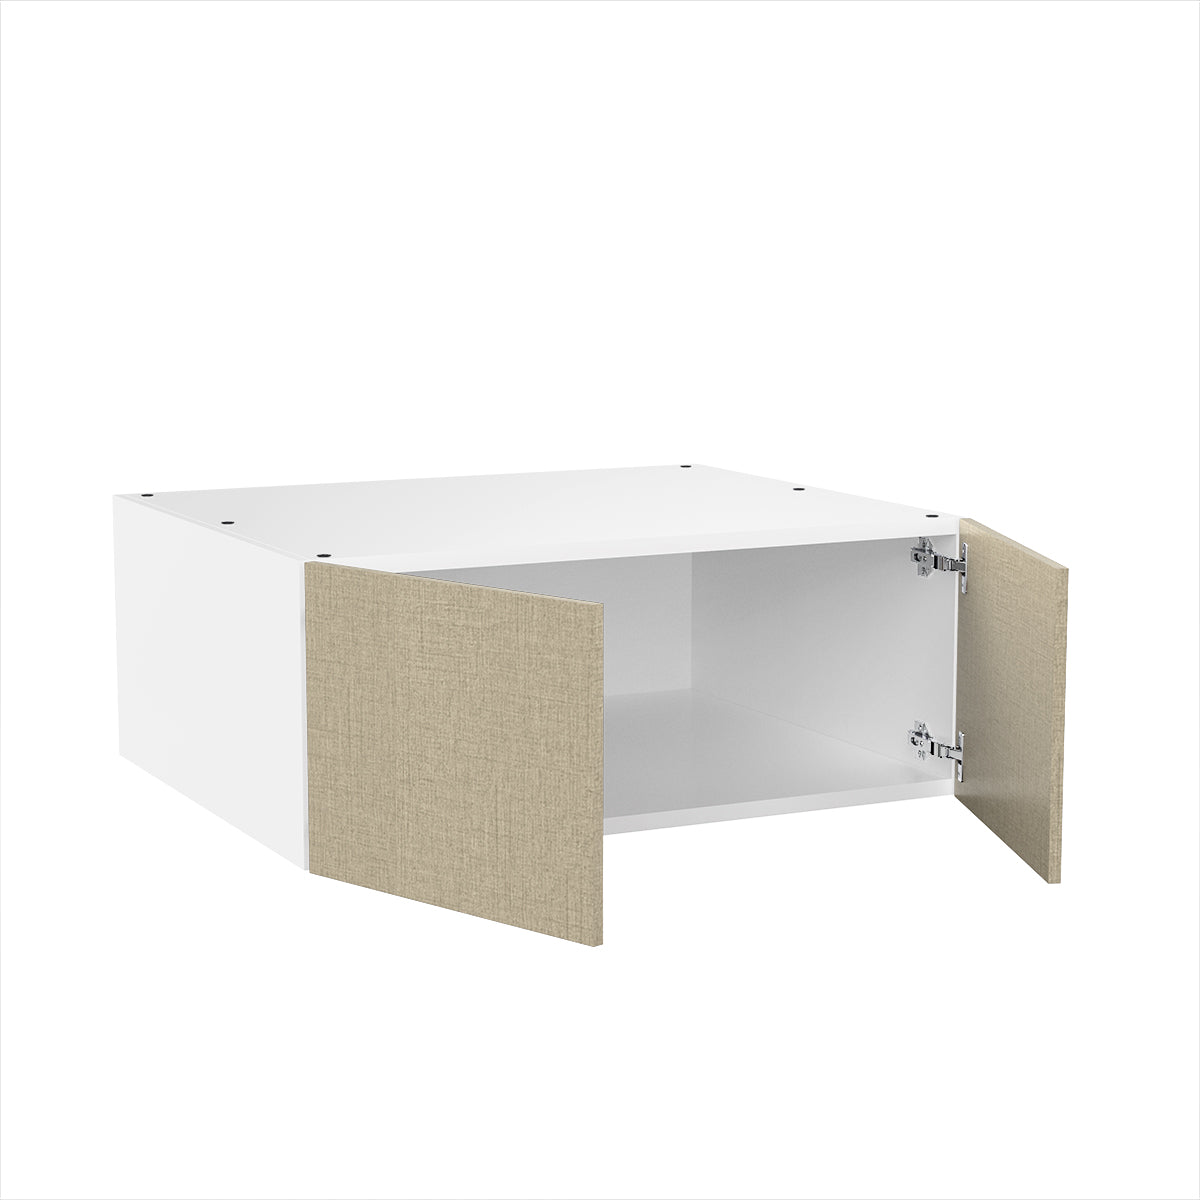 RTA - Fabric Grey - Double Door Wall Cabinets | 33"W x 12"H x 12"D